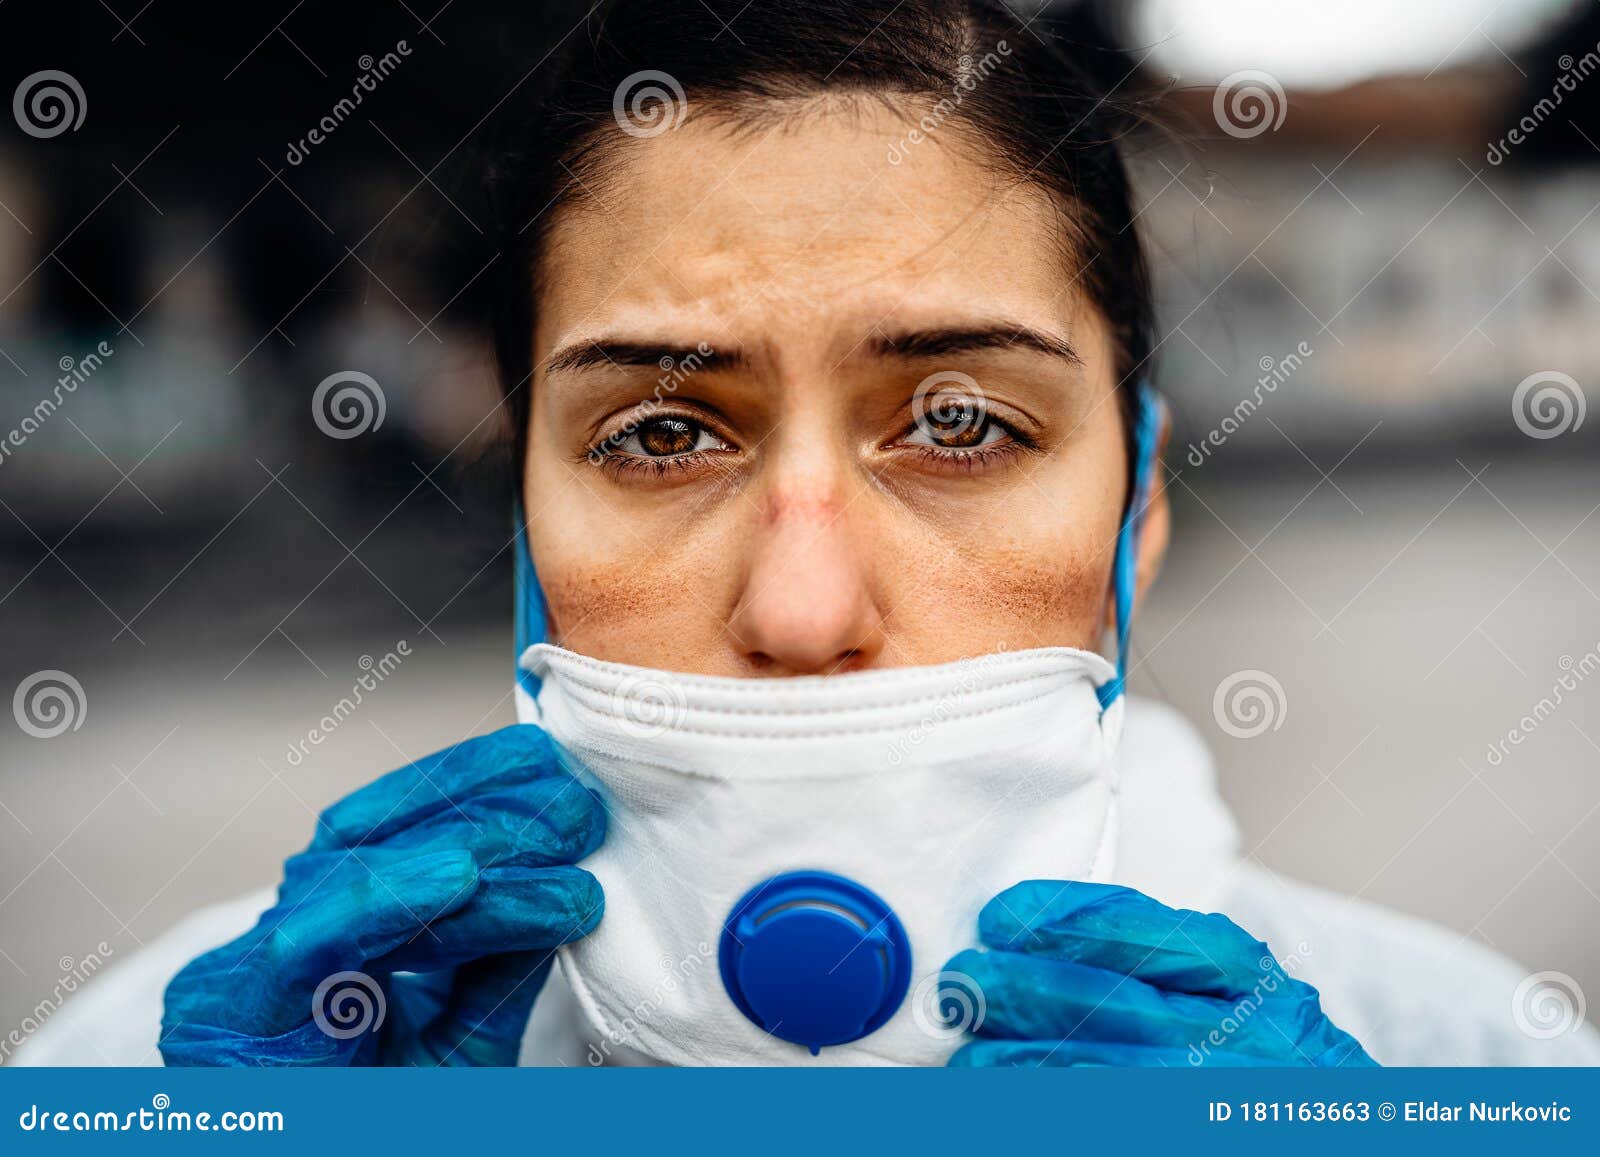 exhausted doctor/nurse wearing coronavirus protective gear n95 mask uniform.coronavirus covid-19 outbreak.mental stress of